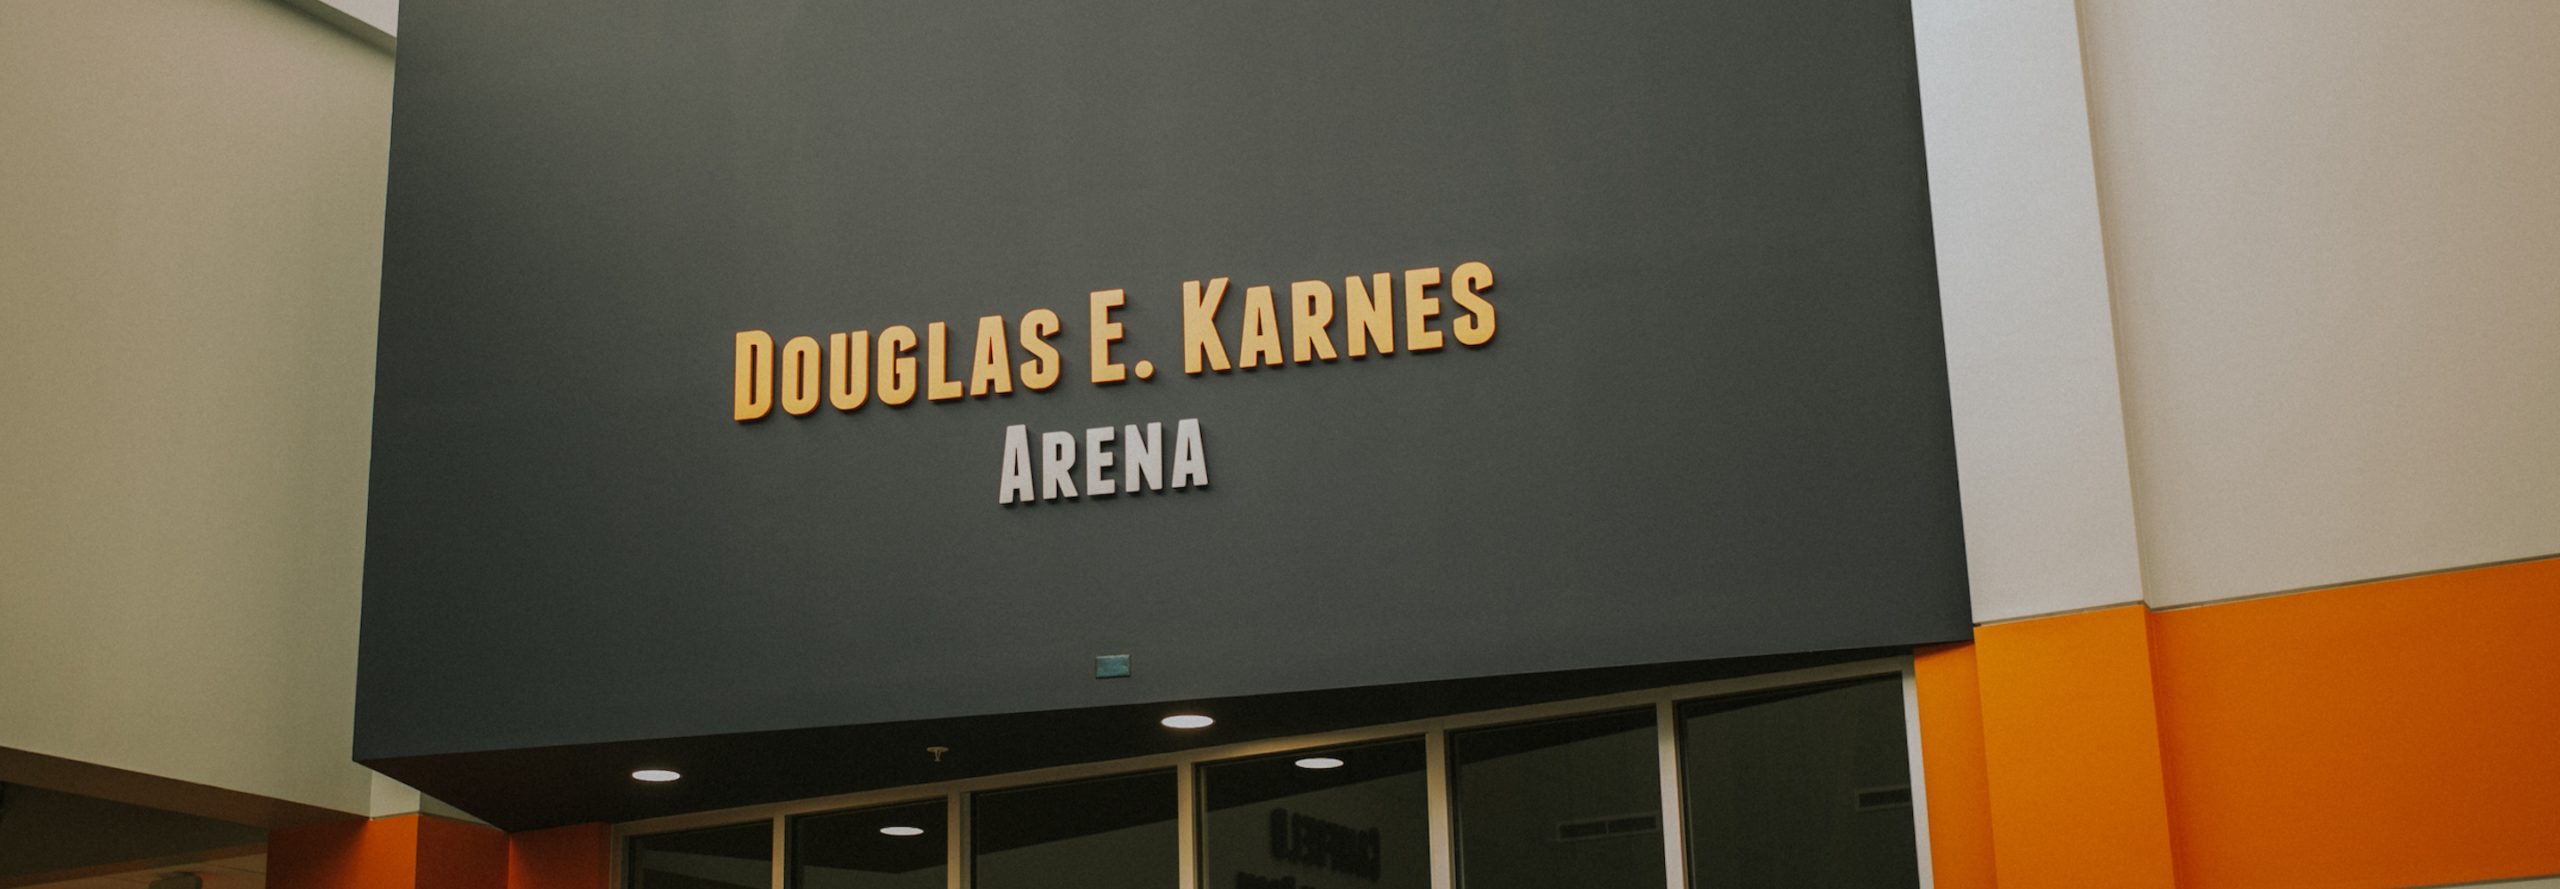 Douglast E. Karnes Arena